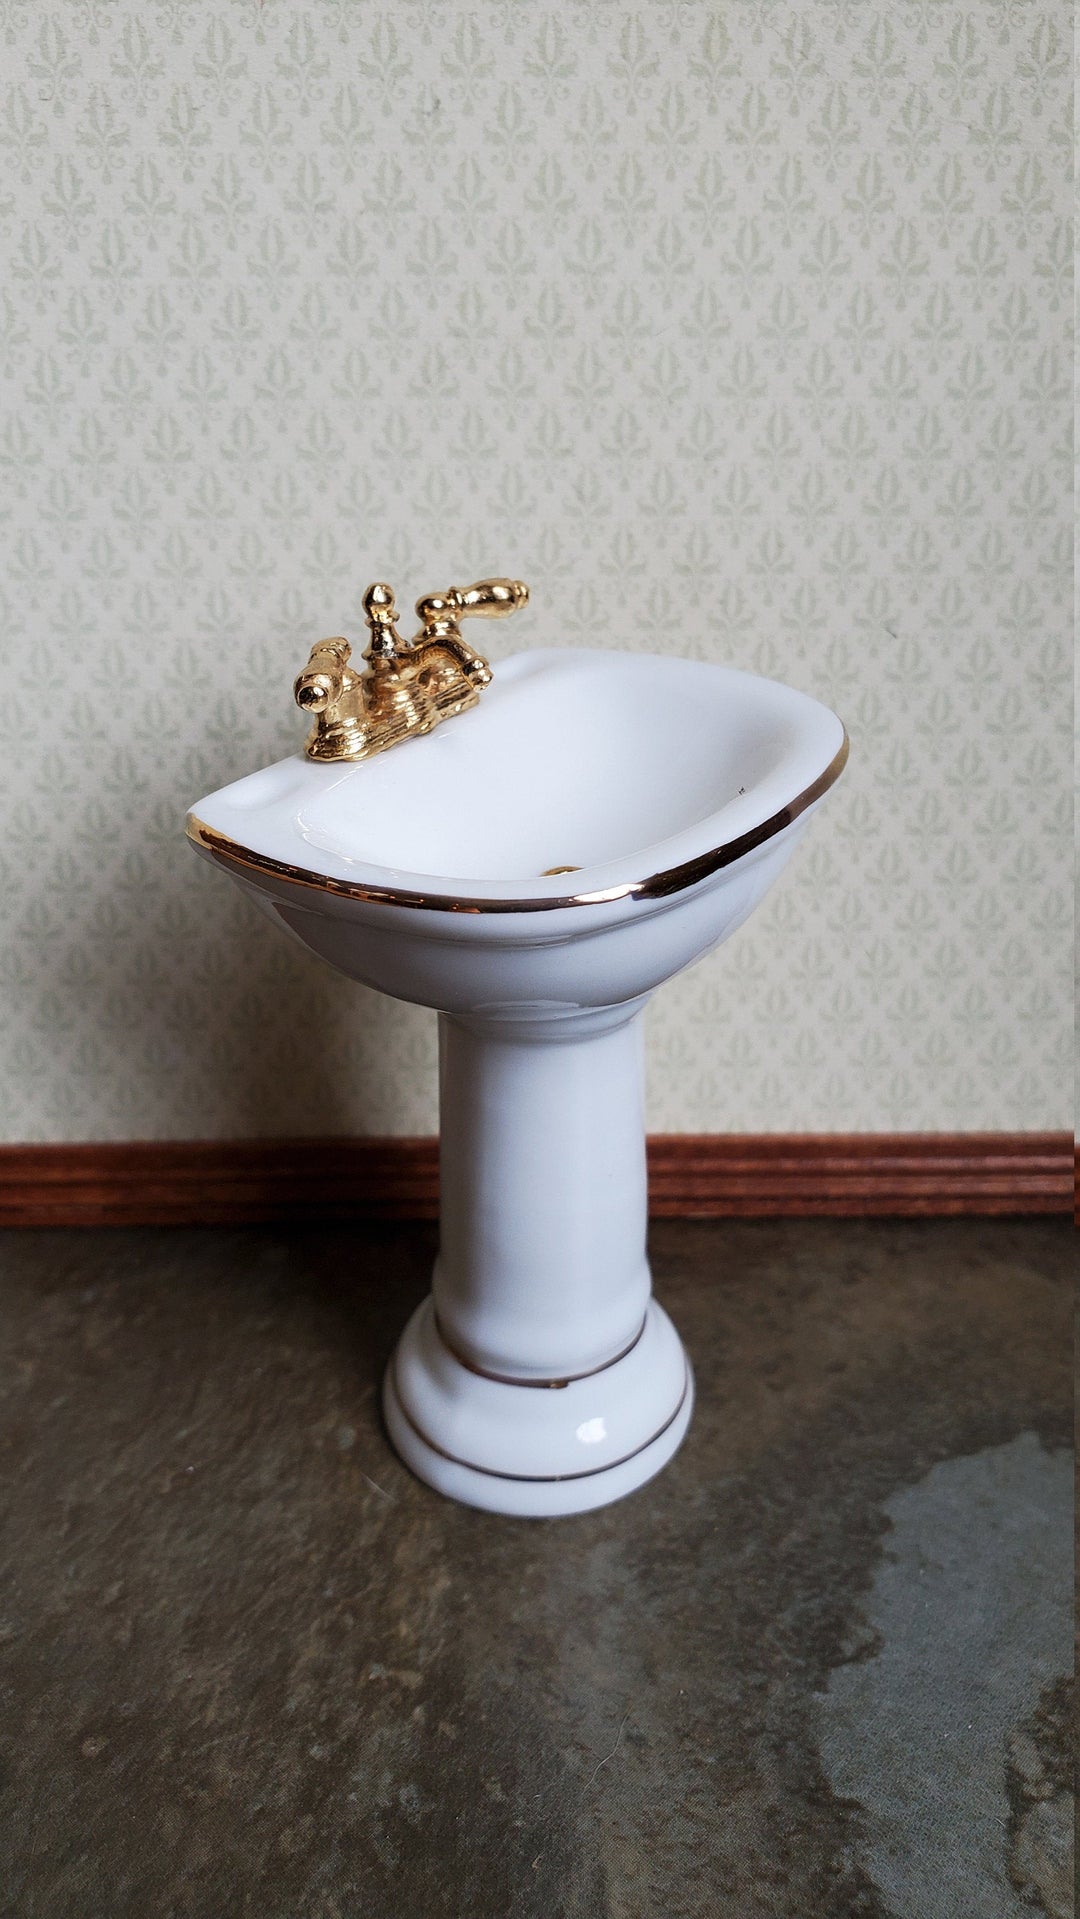 Dollhouse Miniature Pedestal Sink Bathroom White Reutter Porcelain 1:12 Scale